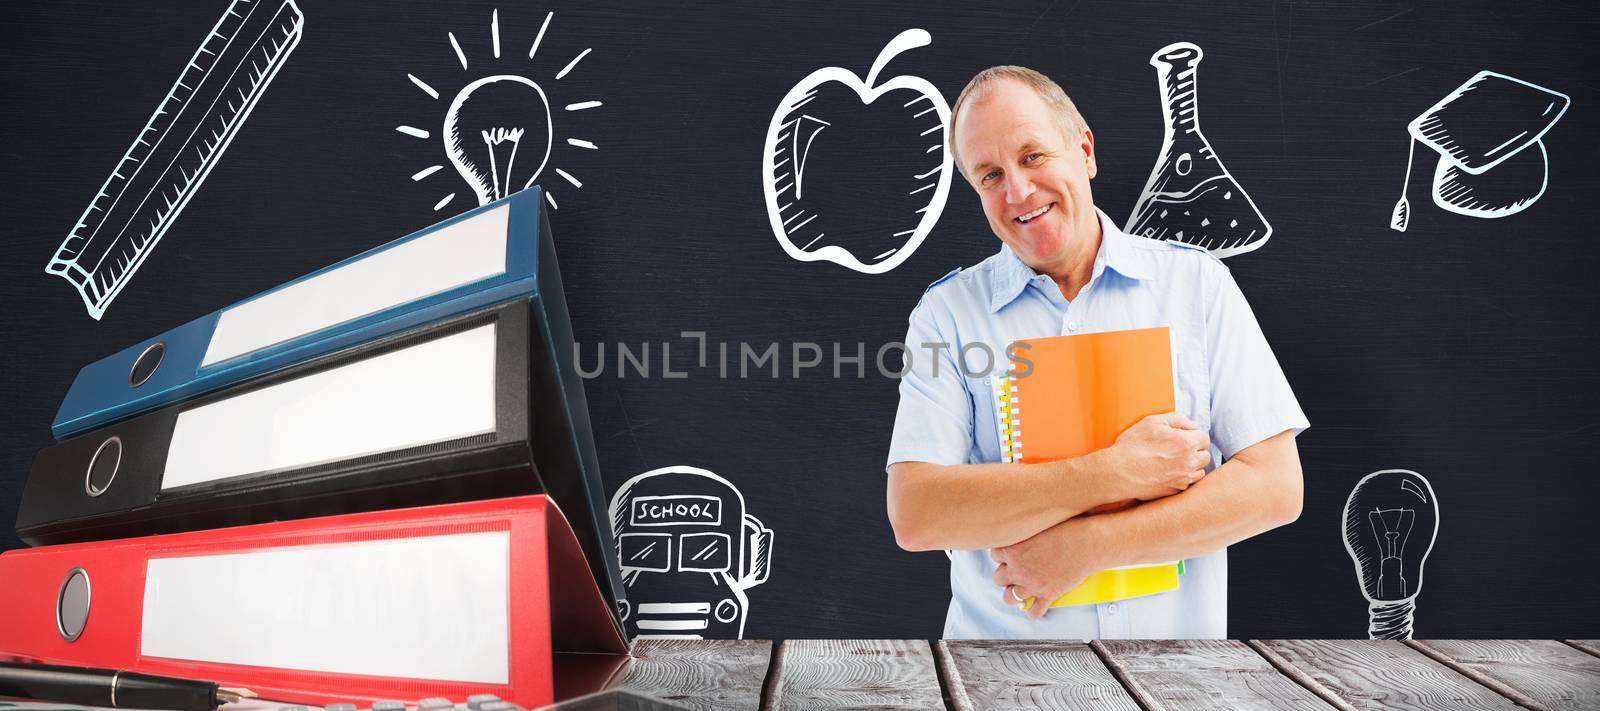 Mature student holding notebooks against blackboard